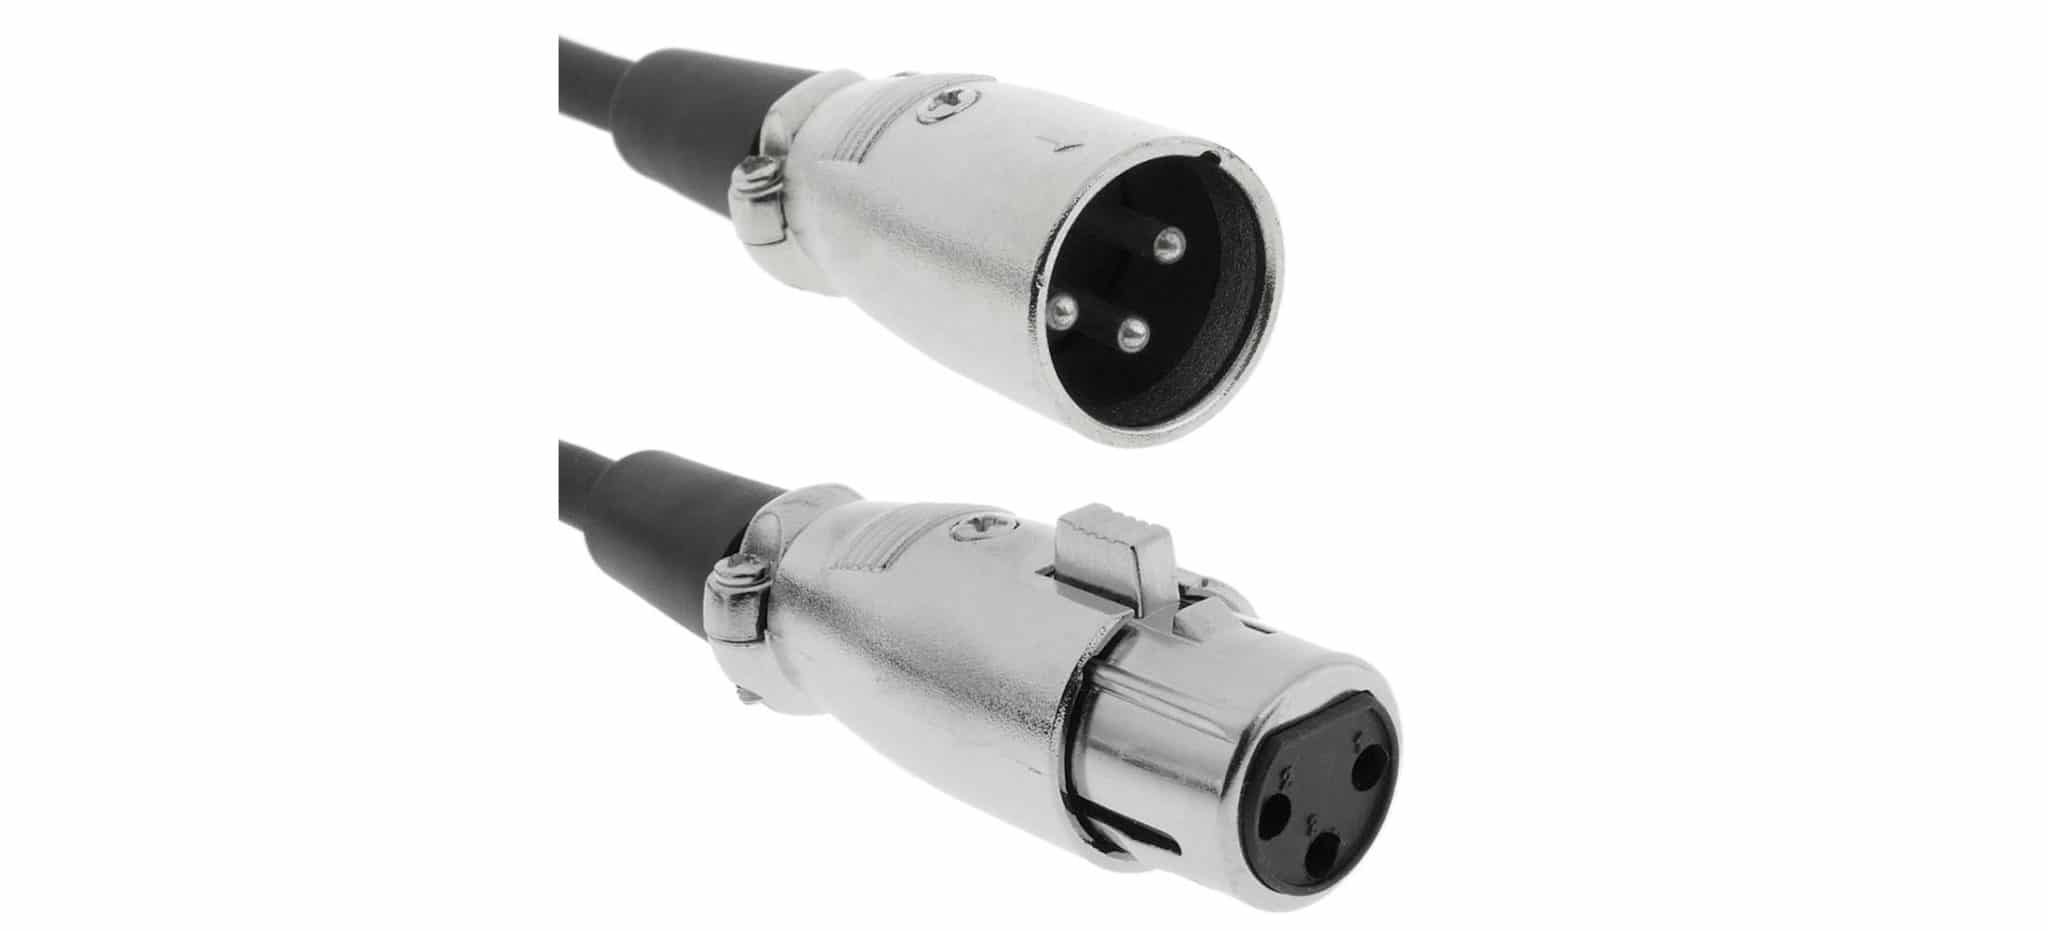 DMX512 Cable, 3 pins XLR, 1m - Soliled